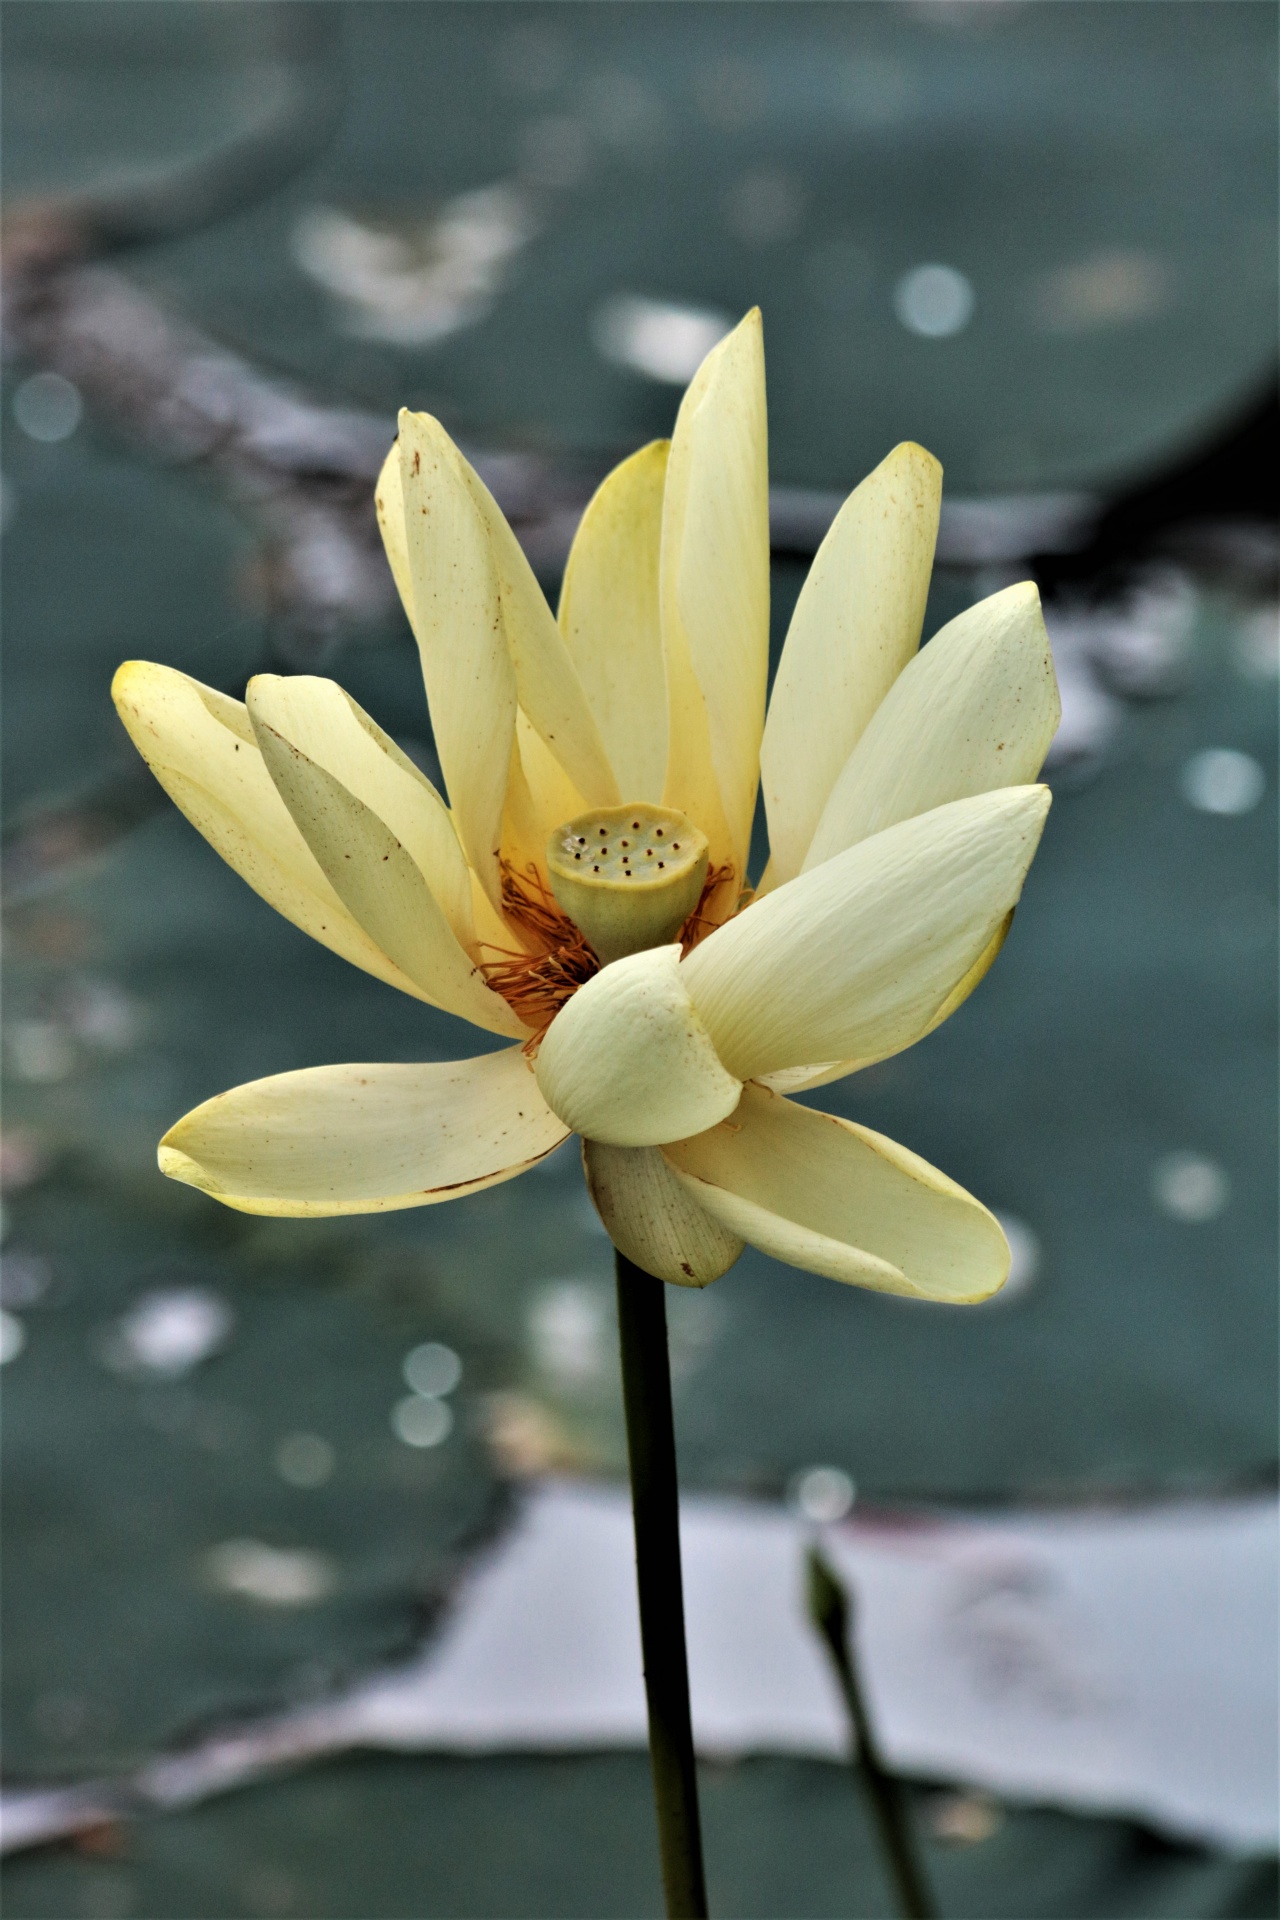 Lotus Flower Close-up